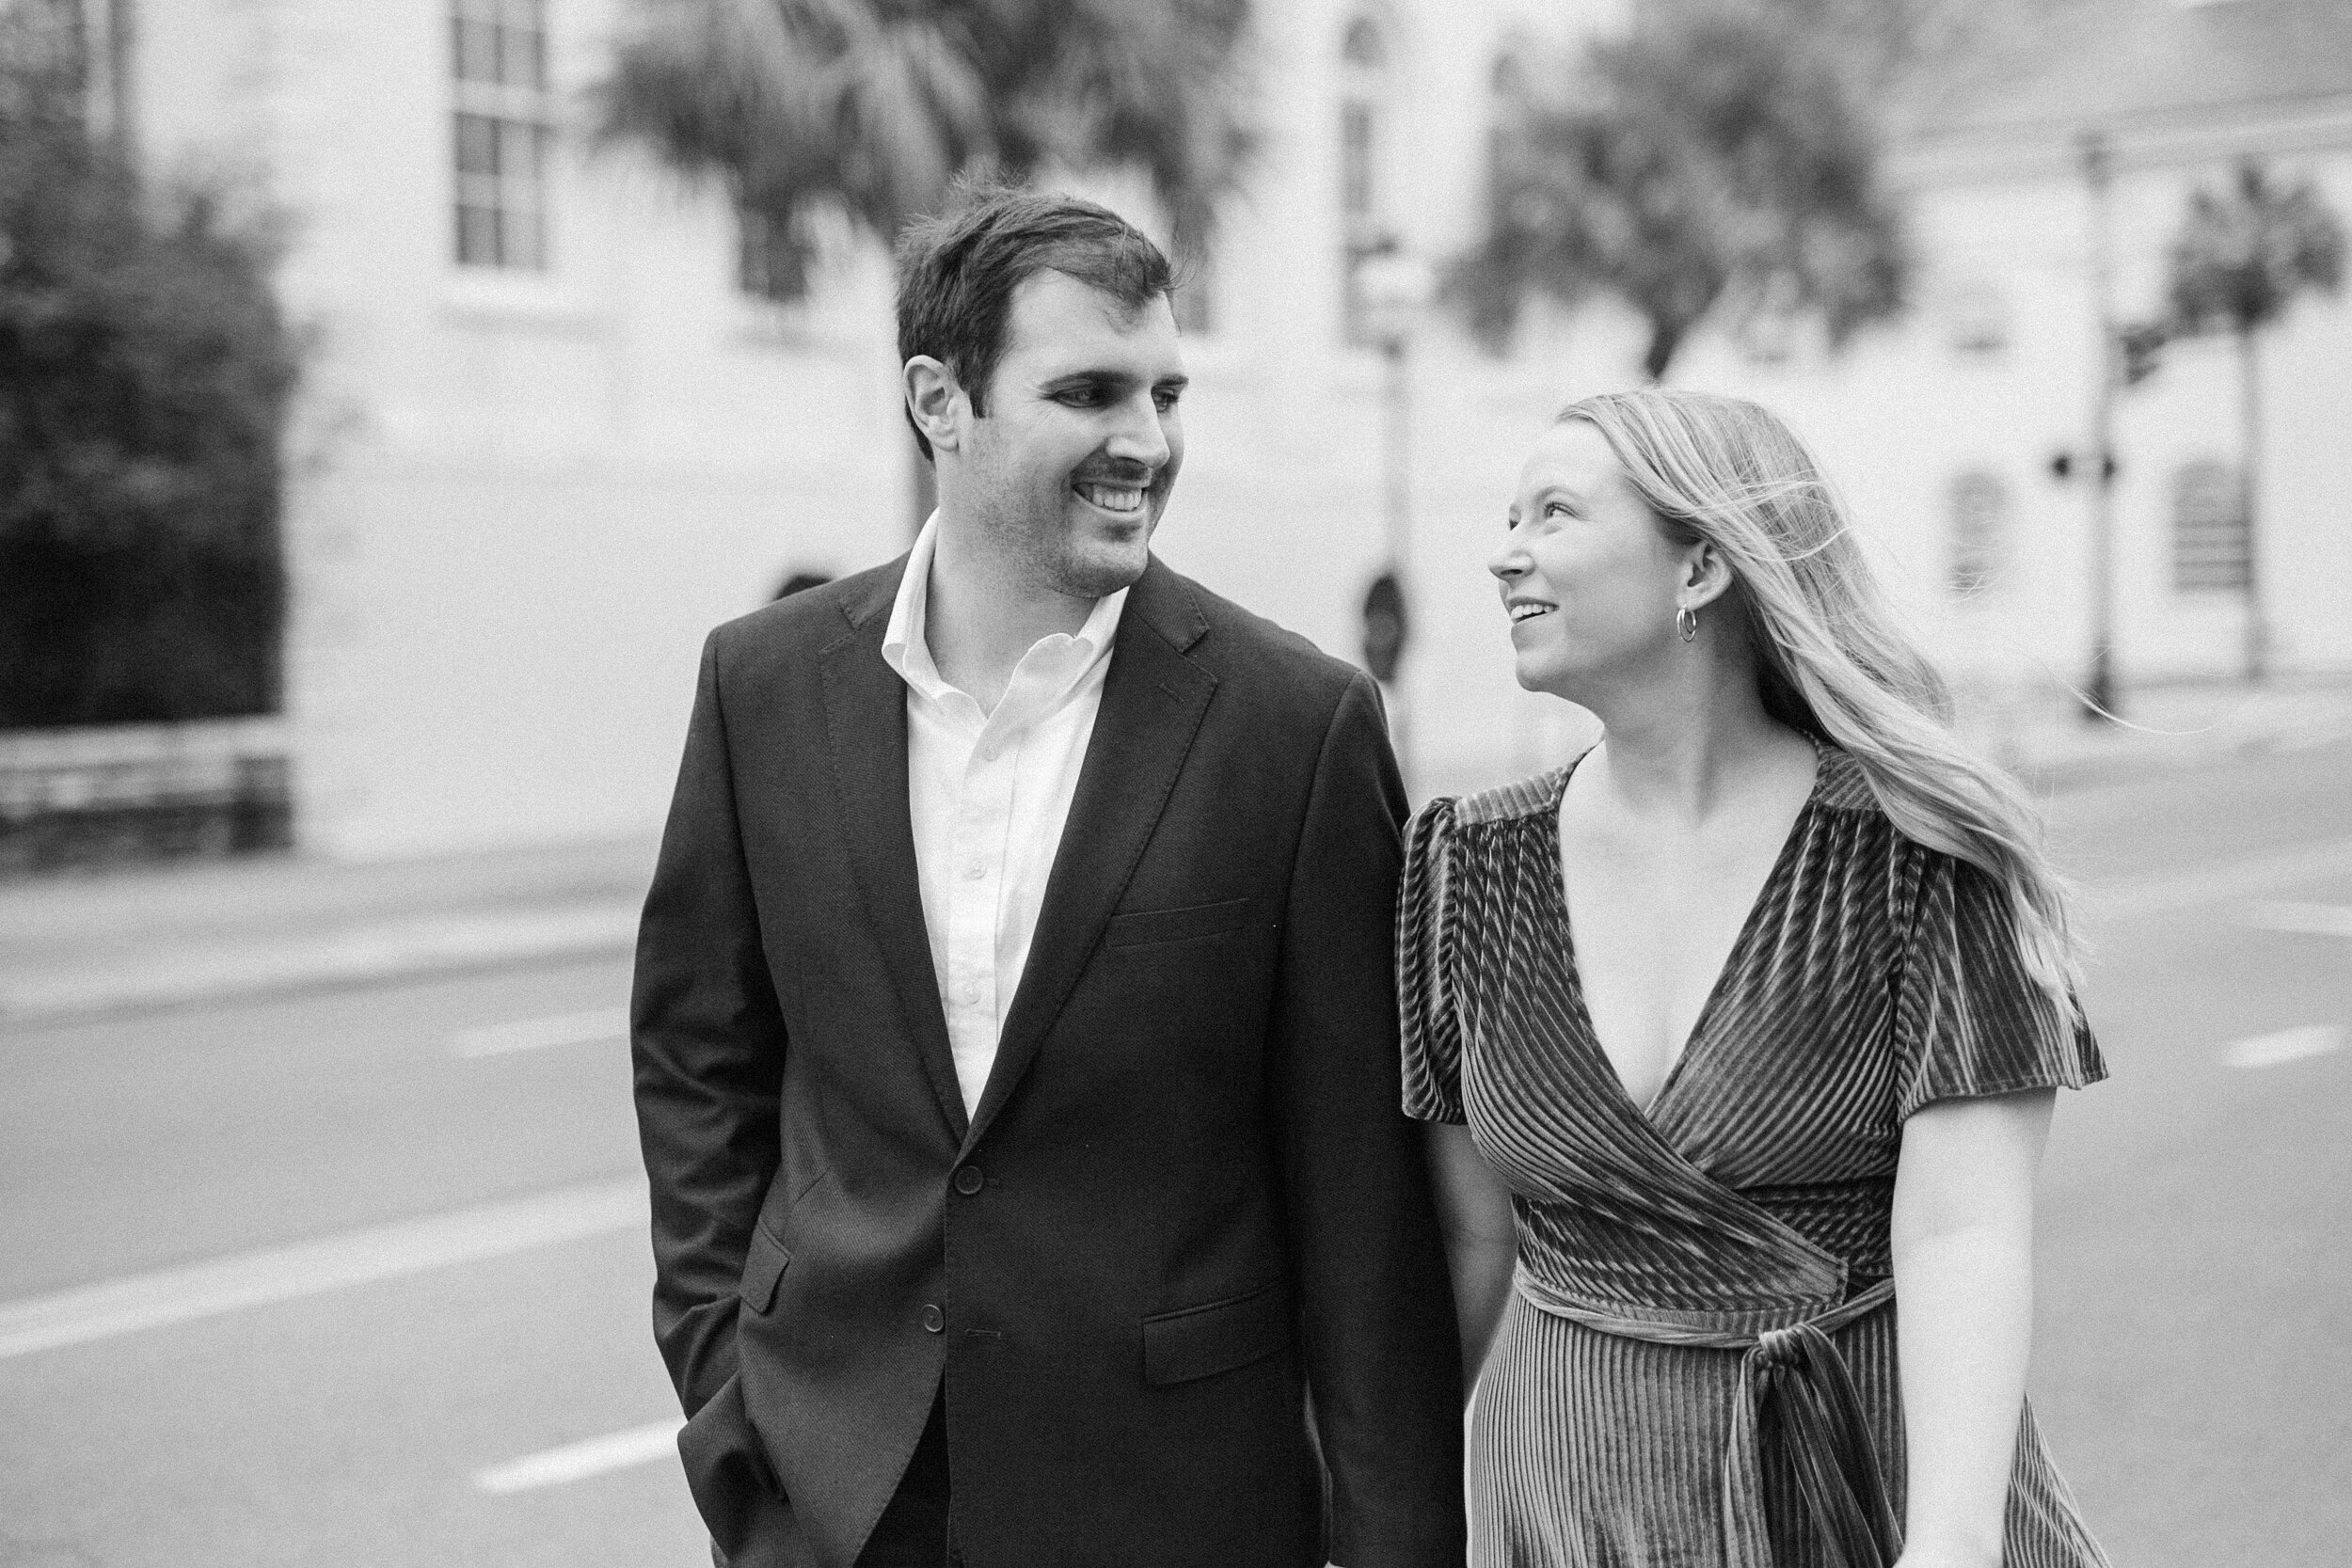 Stunning Charleston couple walk during their joyful engagement portrait session in South Carolina.